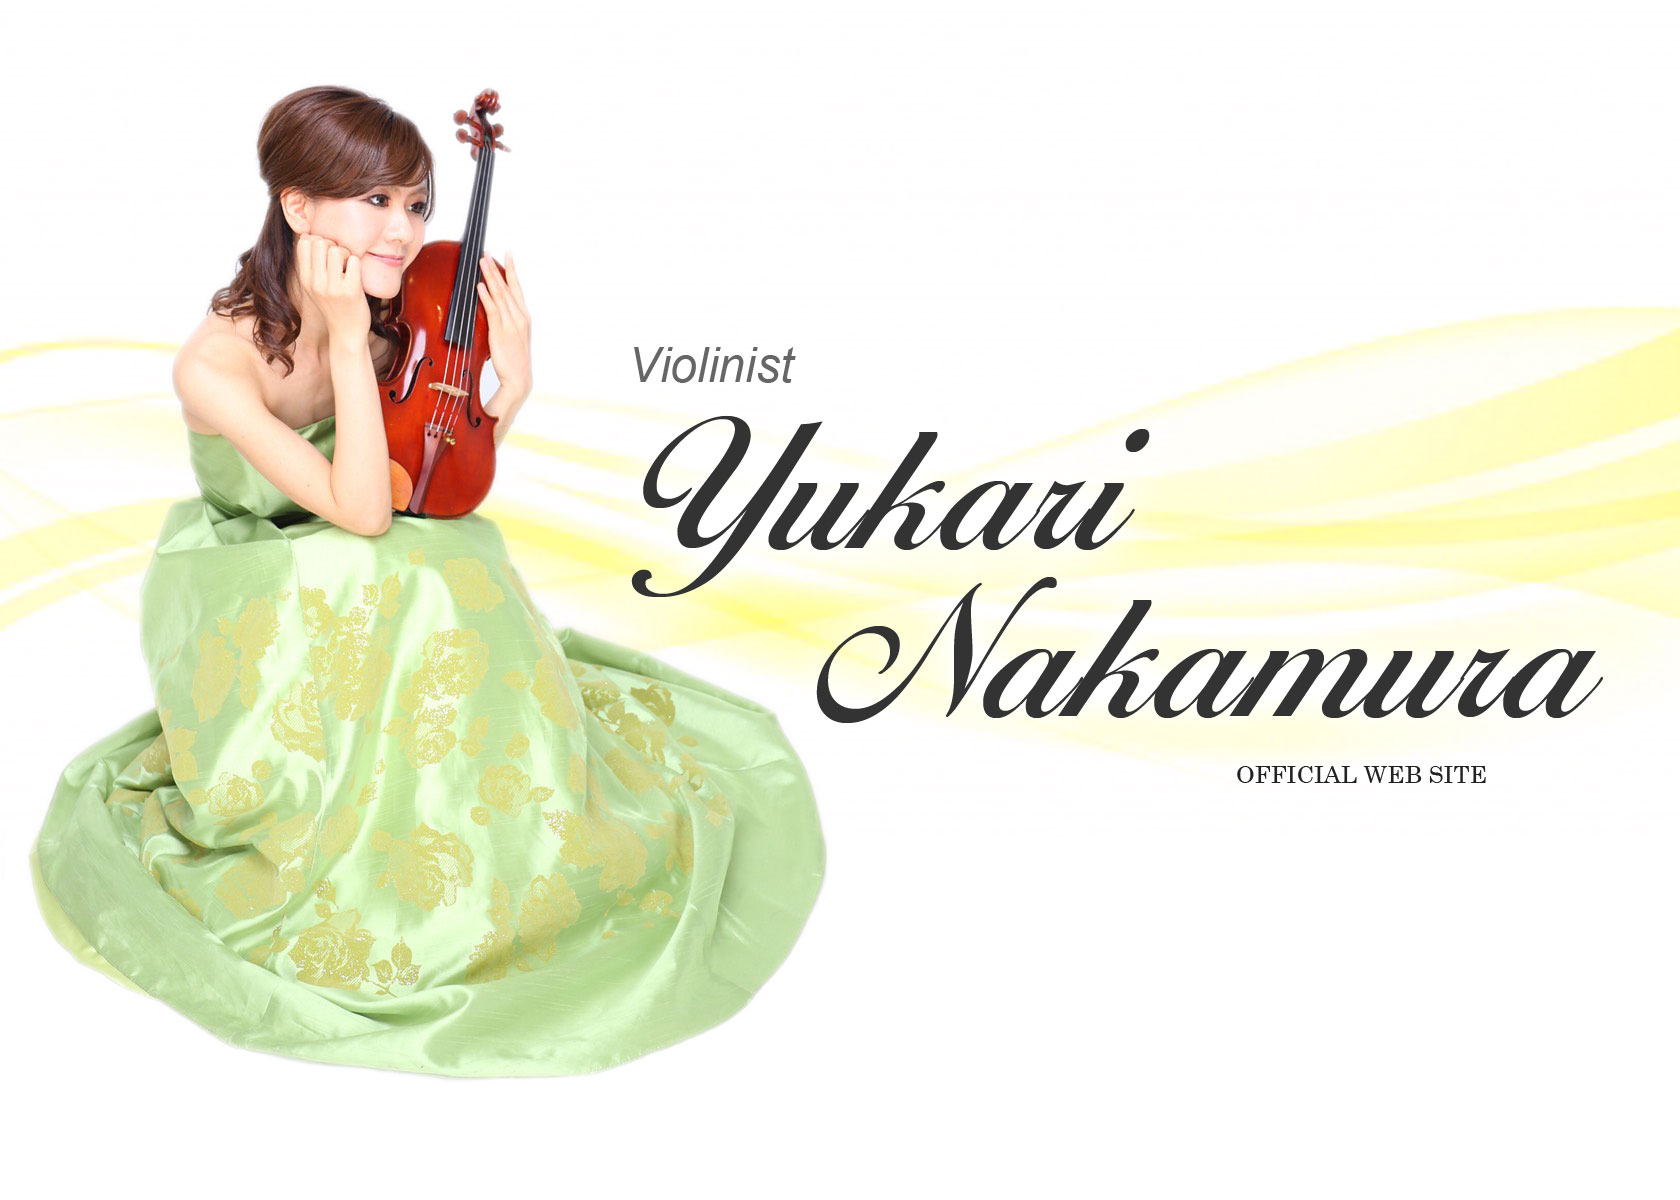 Violinist Yukari Nakamura Official Web Site